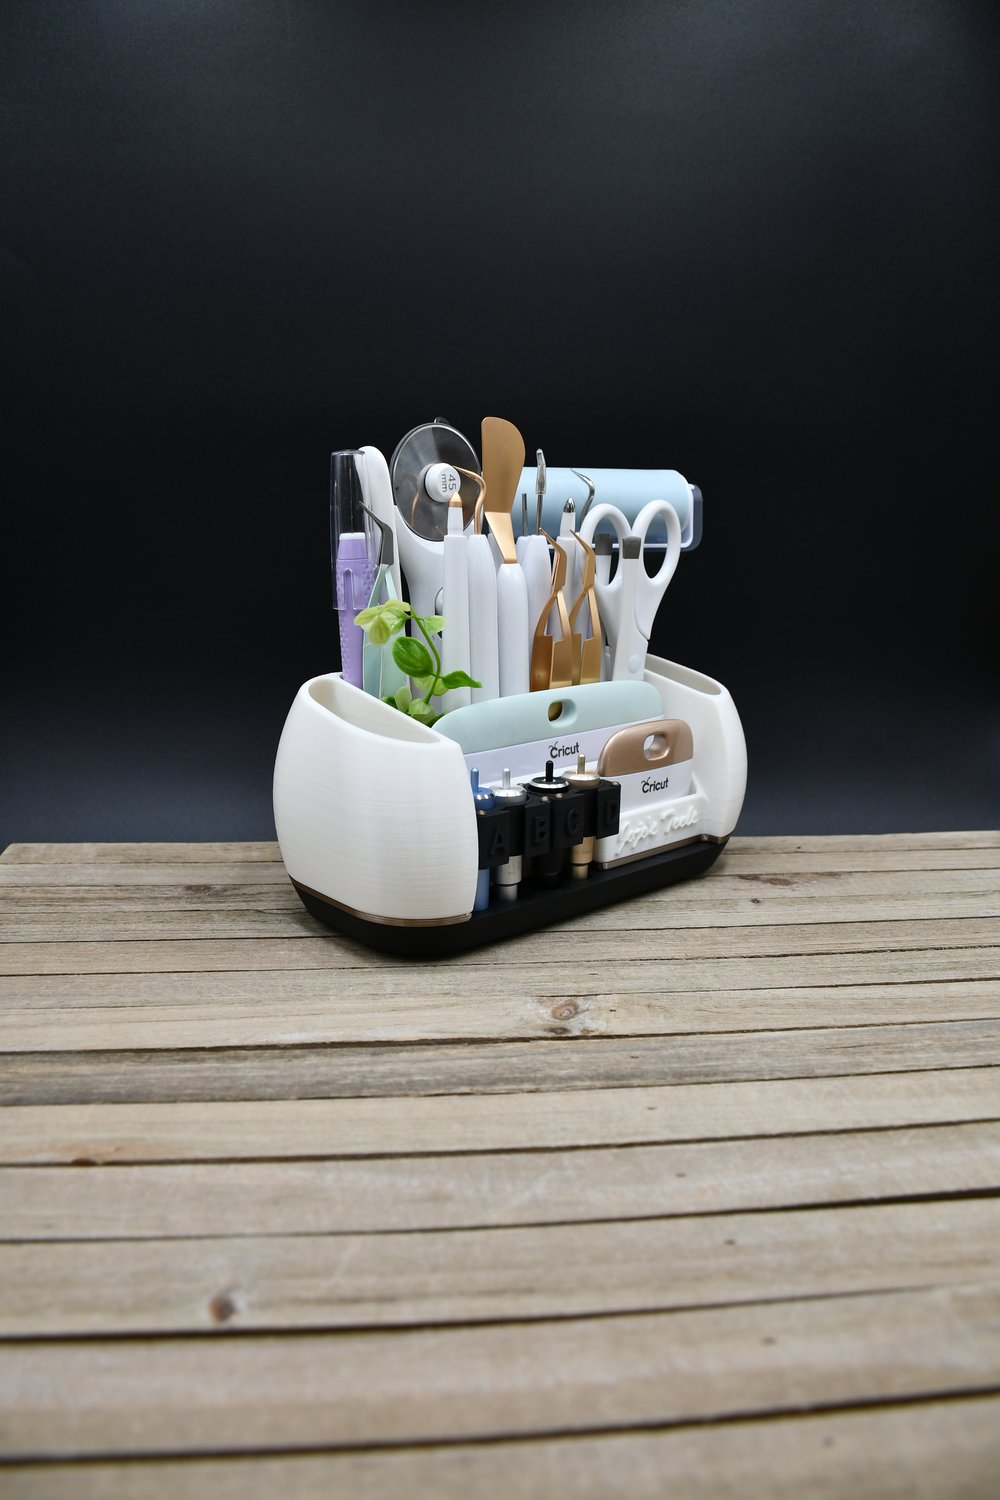 Mini Fry Tool Caddy – World's Cutest Mini Cricut® Explore Tool Caddy / Tool  Holder or Organizer — Zacarias Engineering